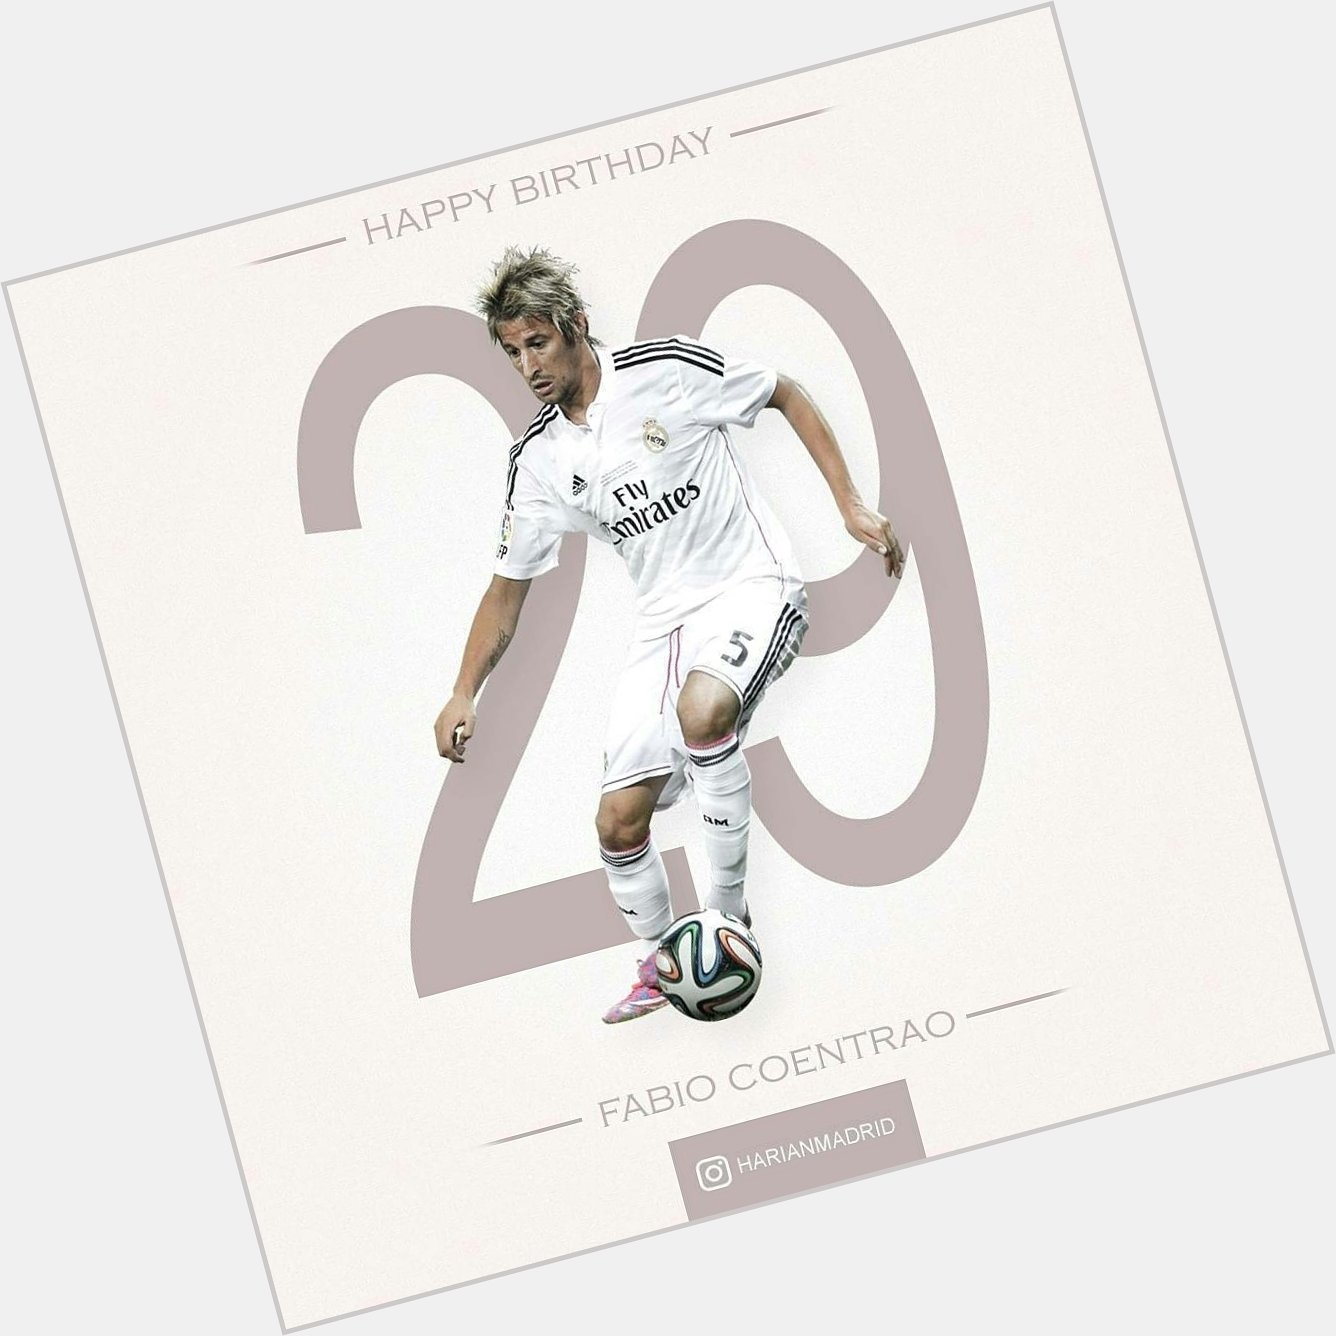 Happy Birthday To Fabio Coentrao, Who Turns 29 Today!    